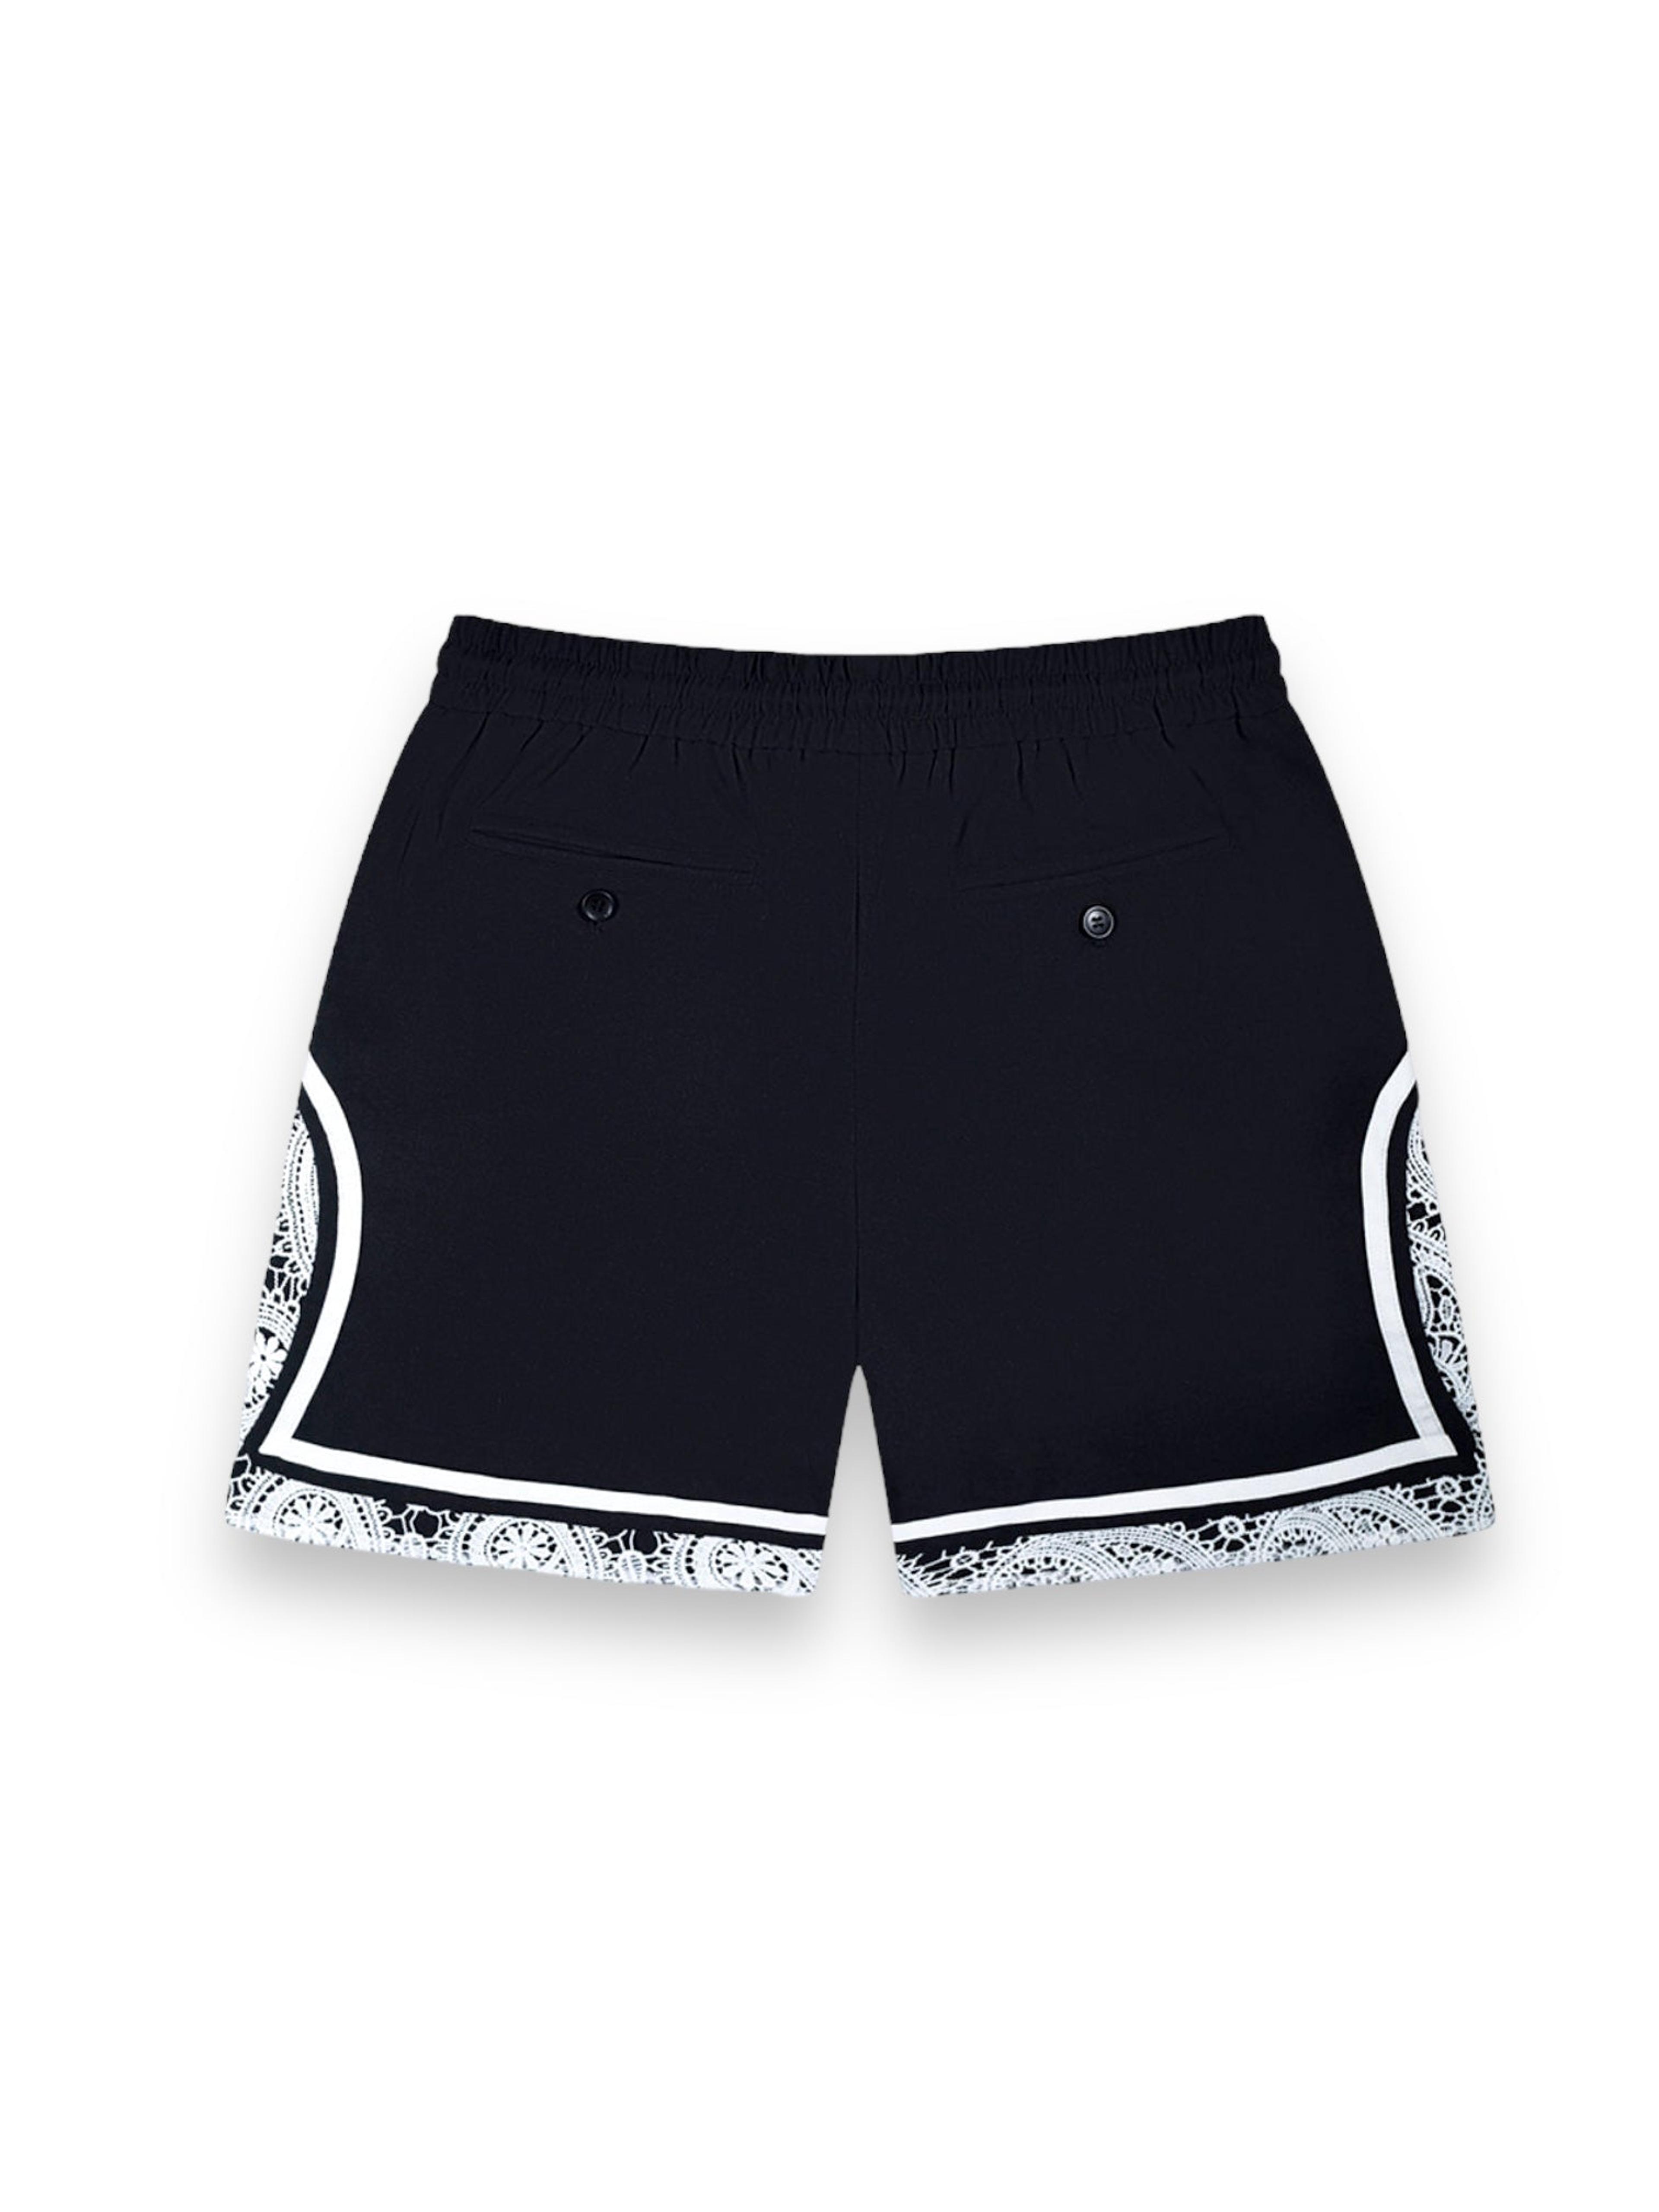 Alternate View 3 of Black Paisley Linen Shorts